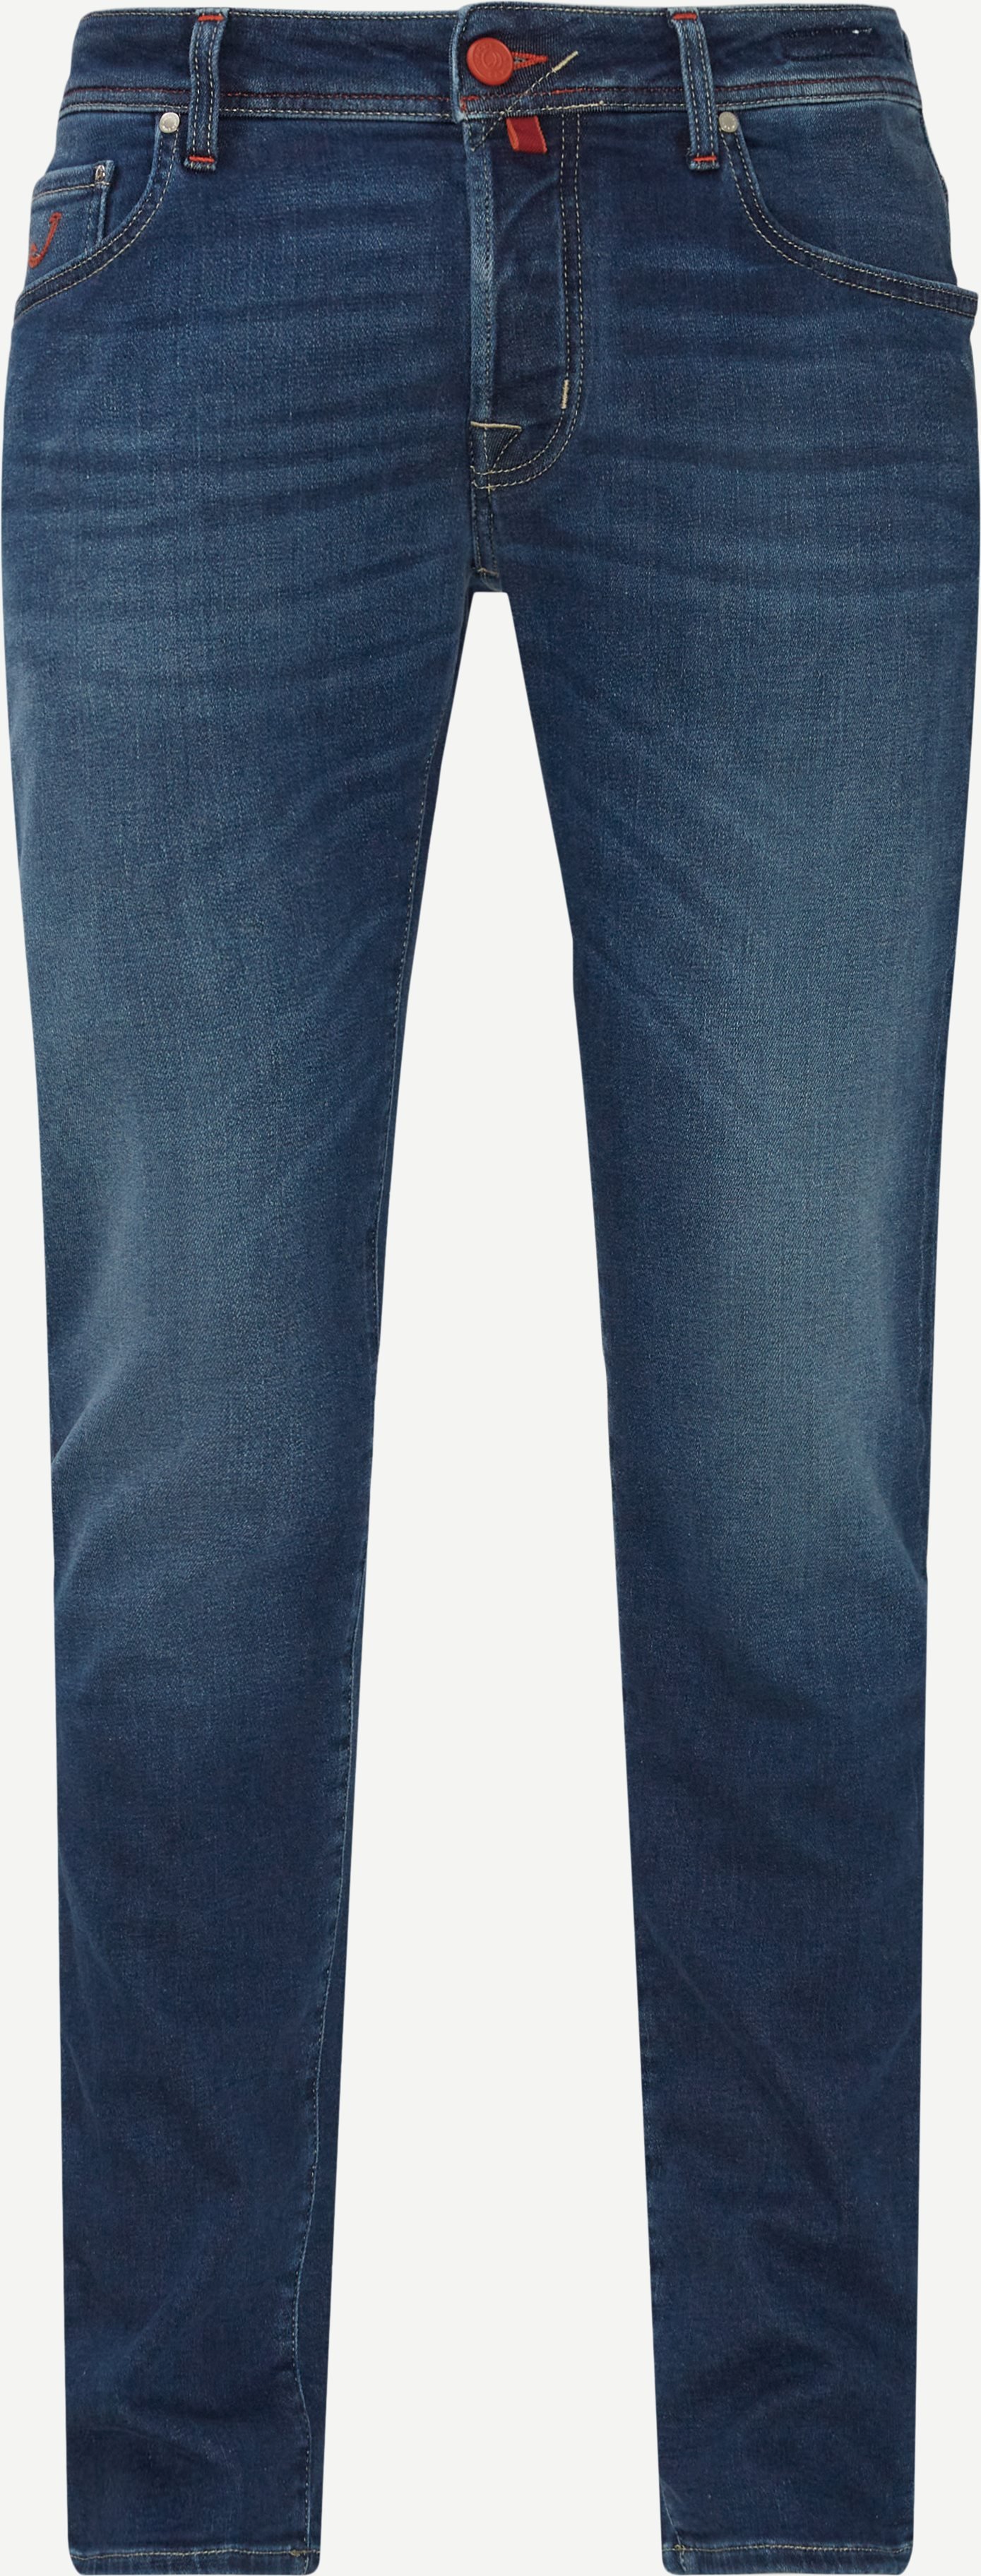 3588 Nick Denim Jeans - Jeans - Slim fit - Denim